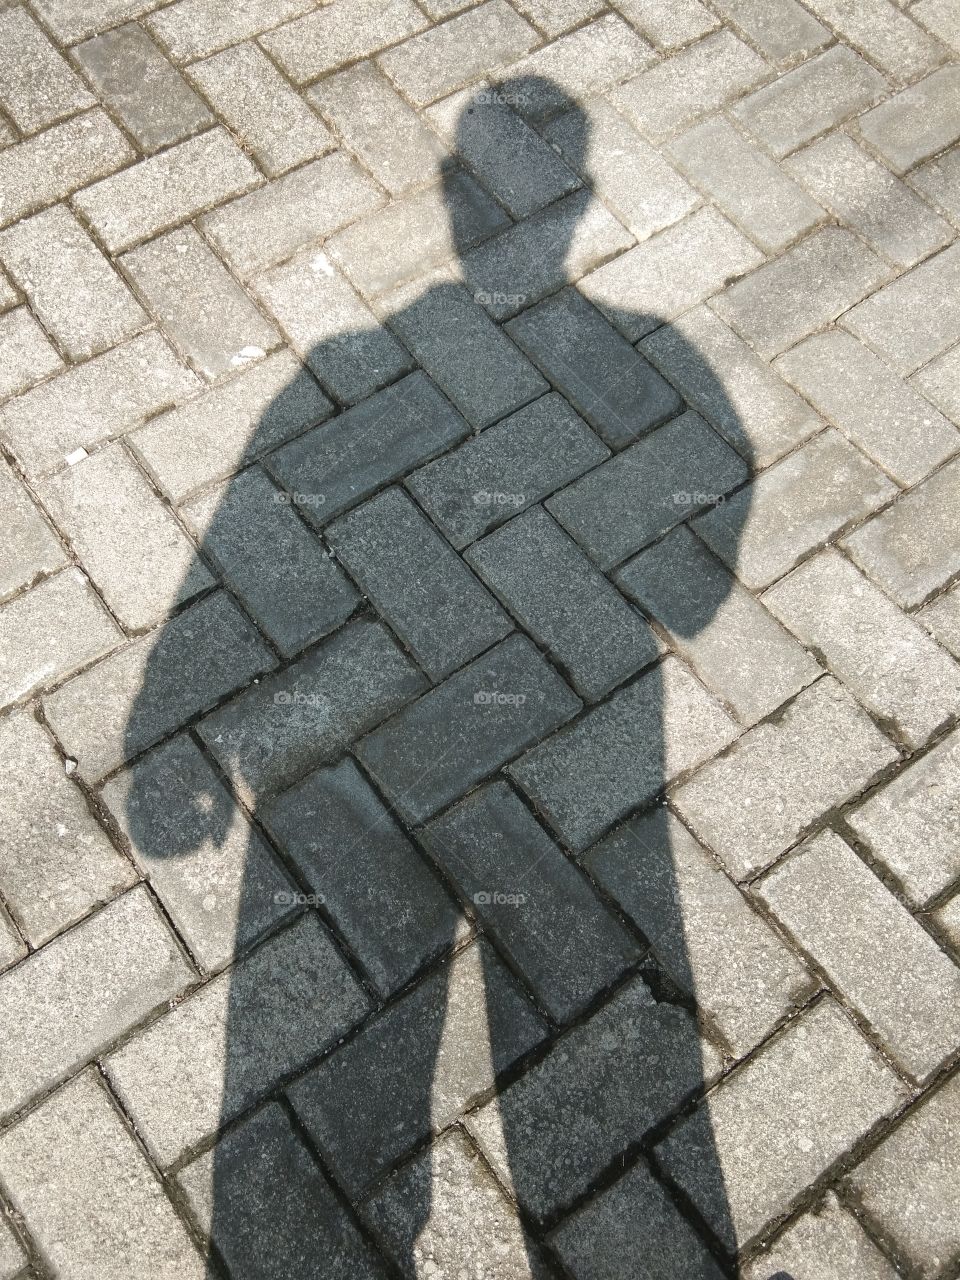 Human shadow on the paving floor